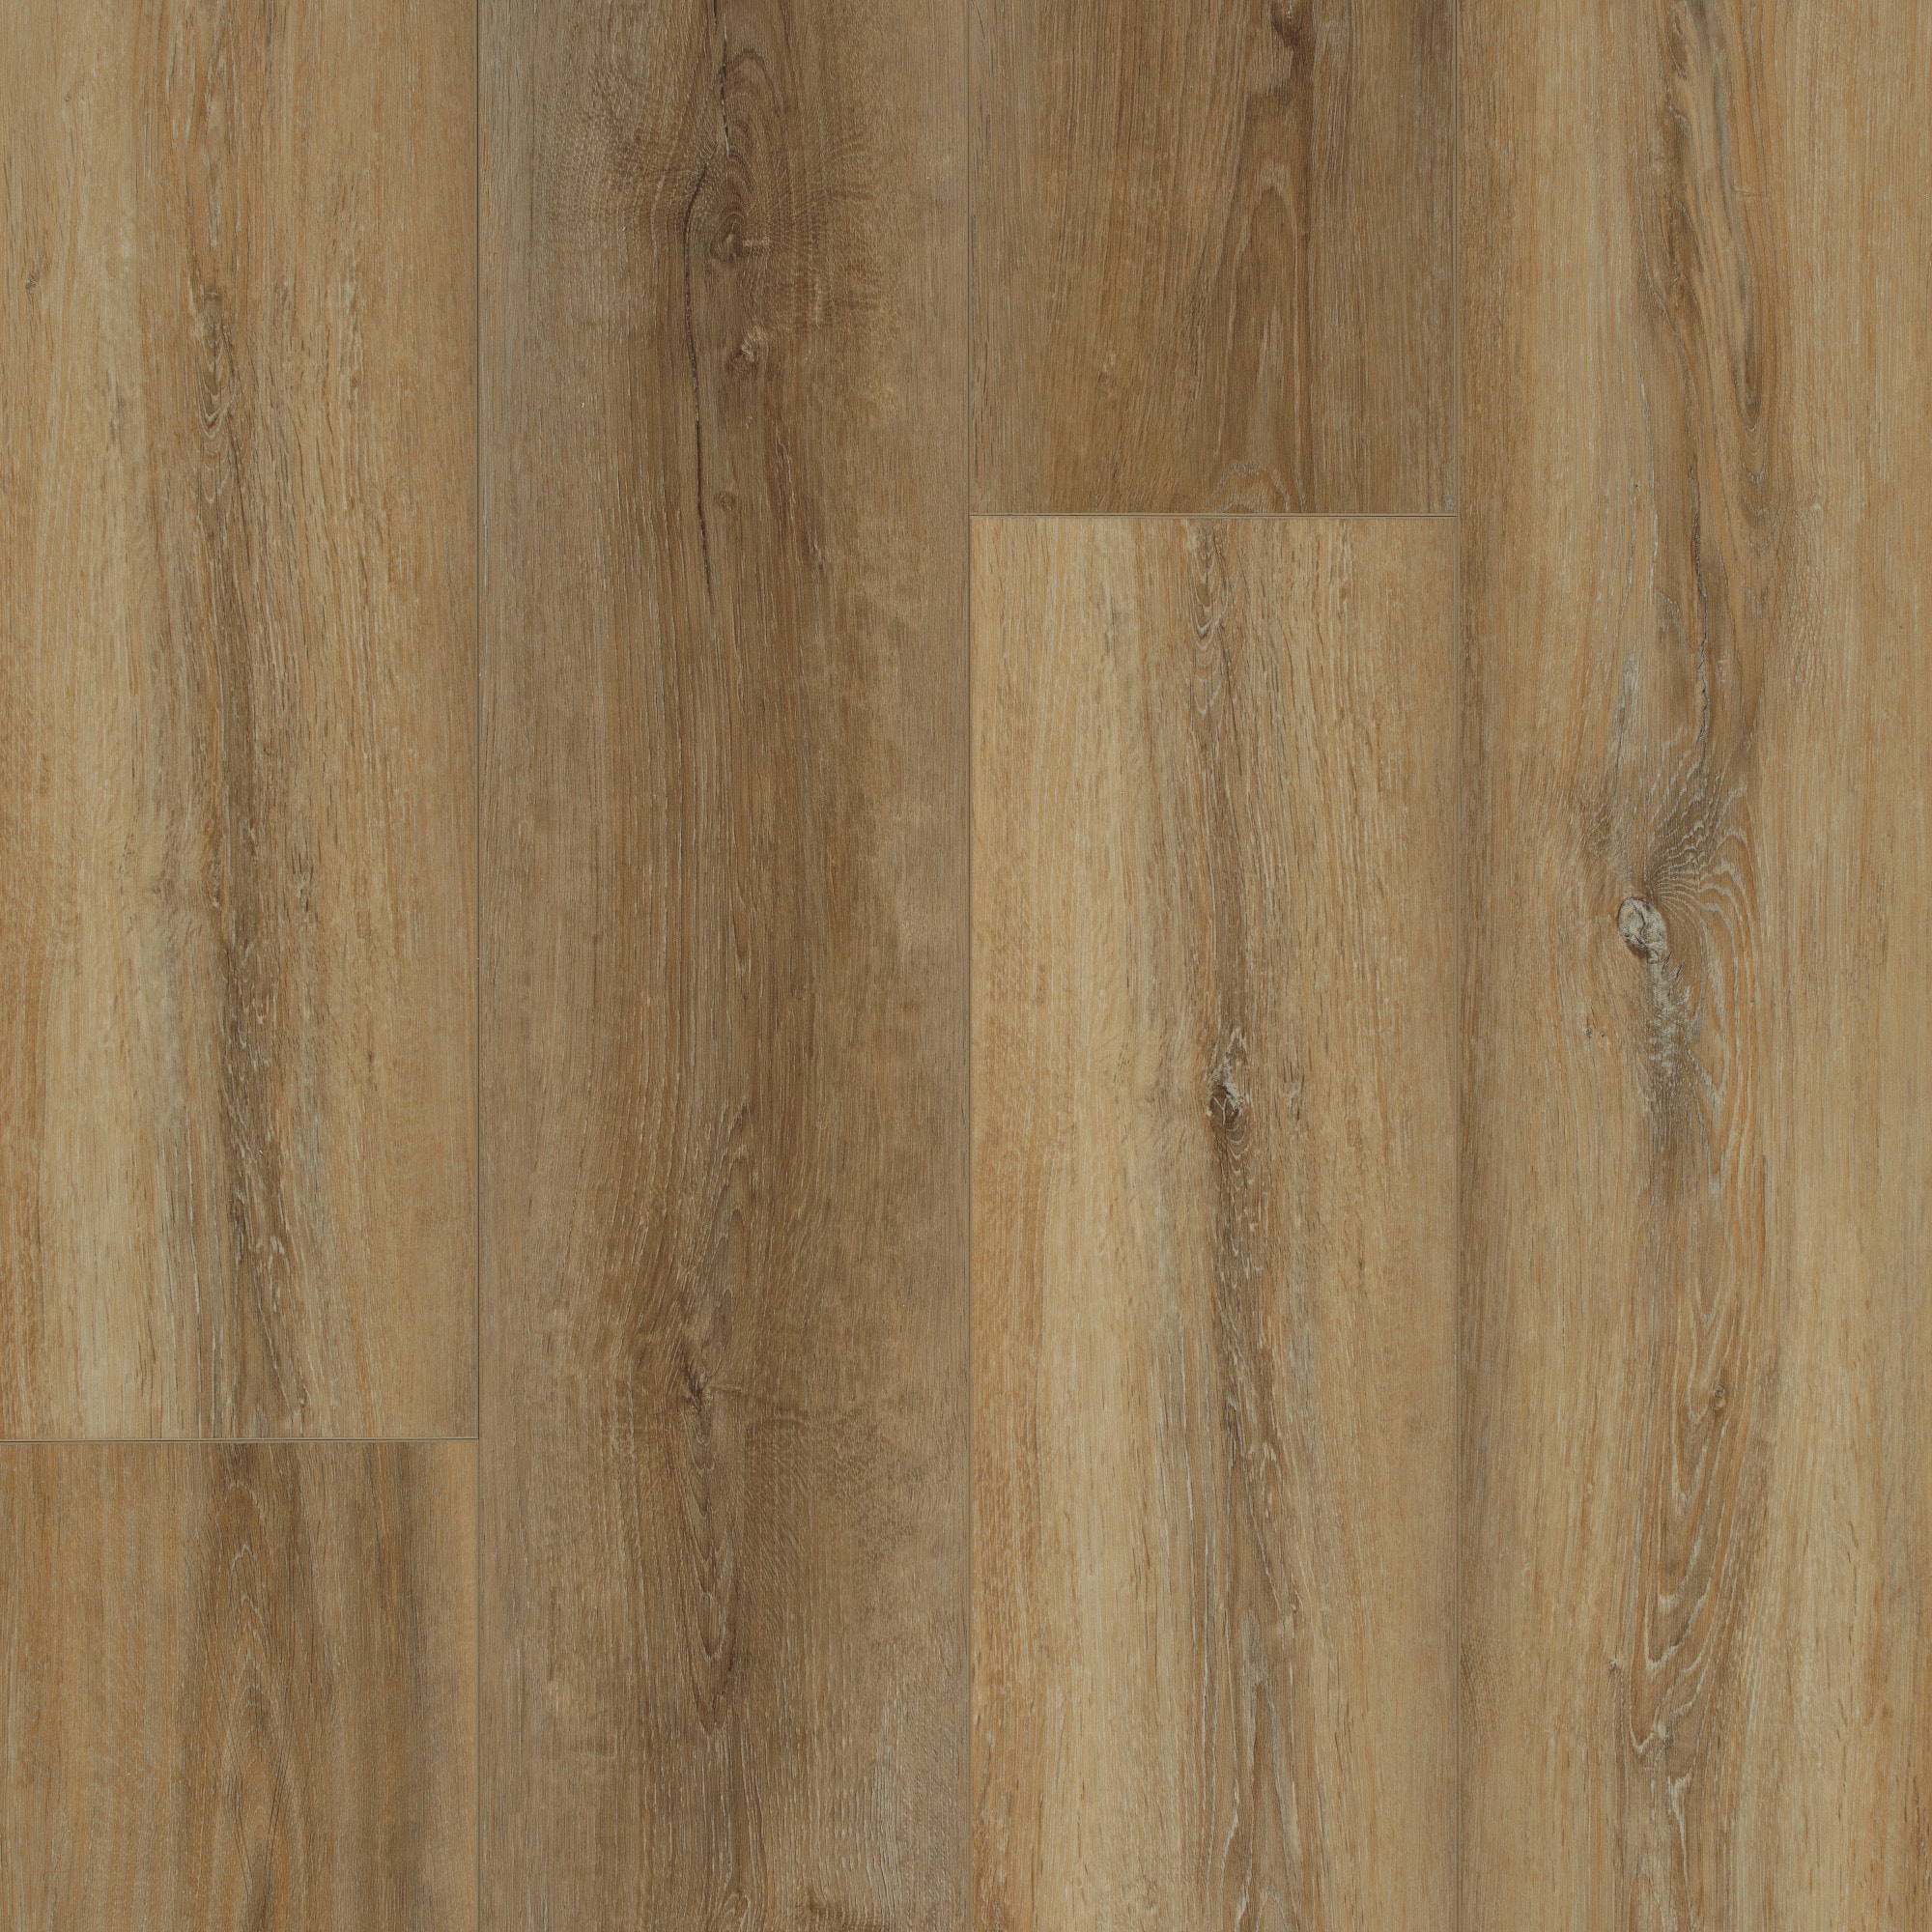  DIY Manual Floor Furniture Repair Kit, Tile Floor Repair Kit  Stone Repair Kit with 11 Block Wax, Hardwood Laminate Wooden Wood Floor  Furniture Repair Kit (Including Battery) : Health & Household